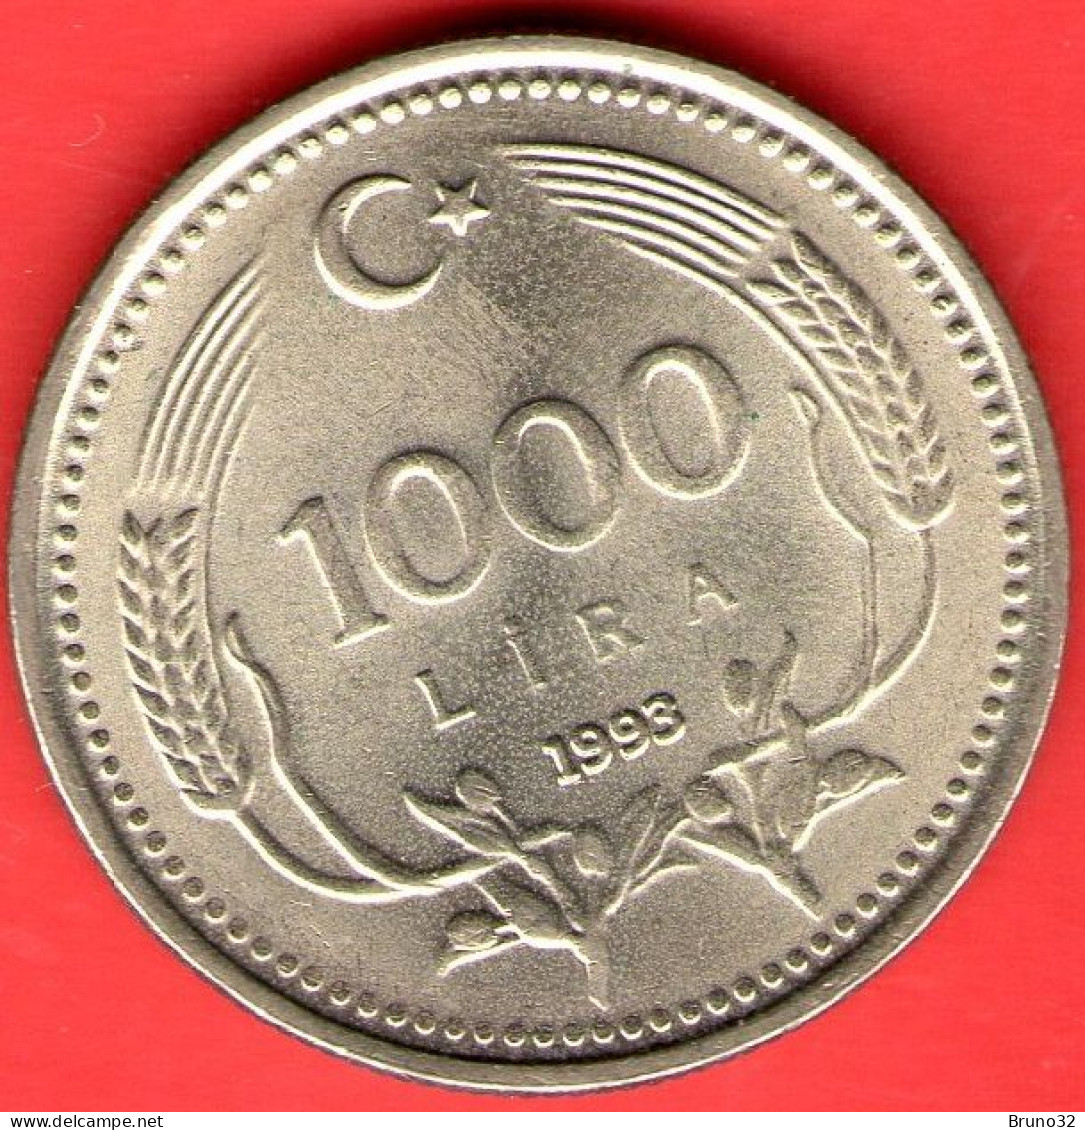 Turchia - Turkey - Turkije - 1993 - 1000 Lira - QFDC/aUNC - Come Da Foto - Turquie